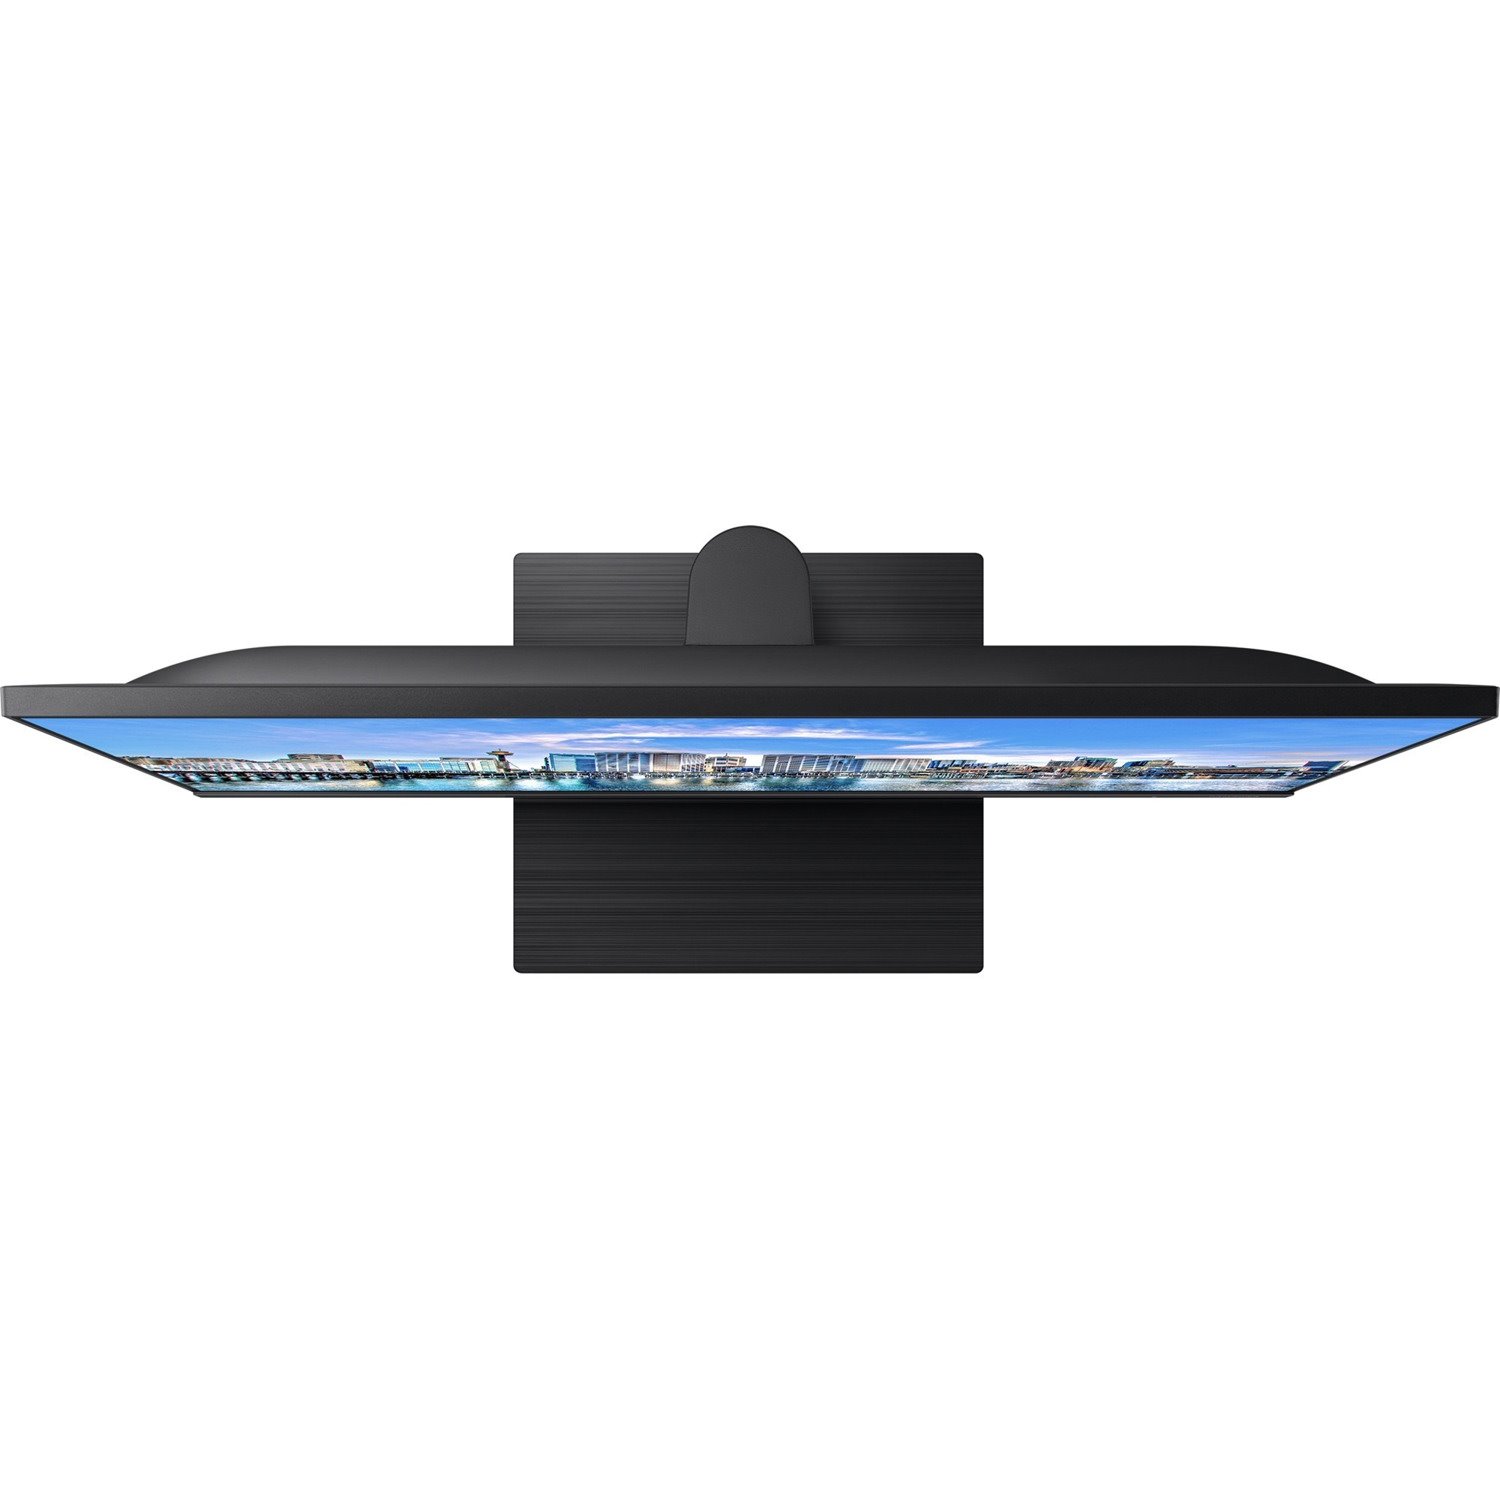 Samsung F27T450FQE 68.6 cm (27") Full HD LED LCD Monitor - 16:9 - Black